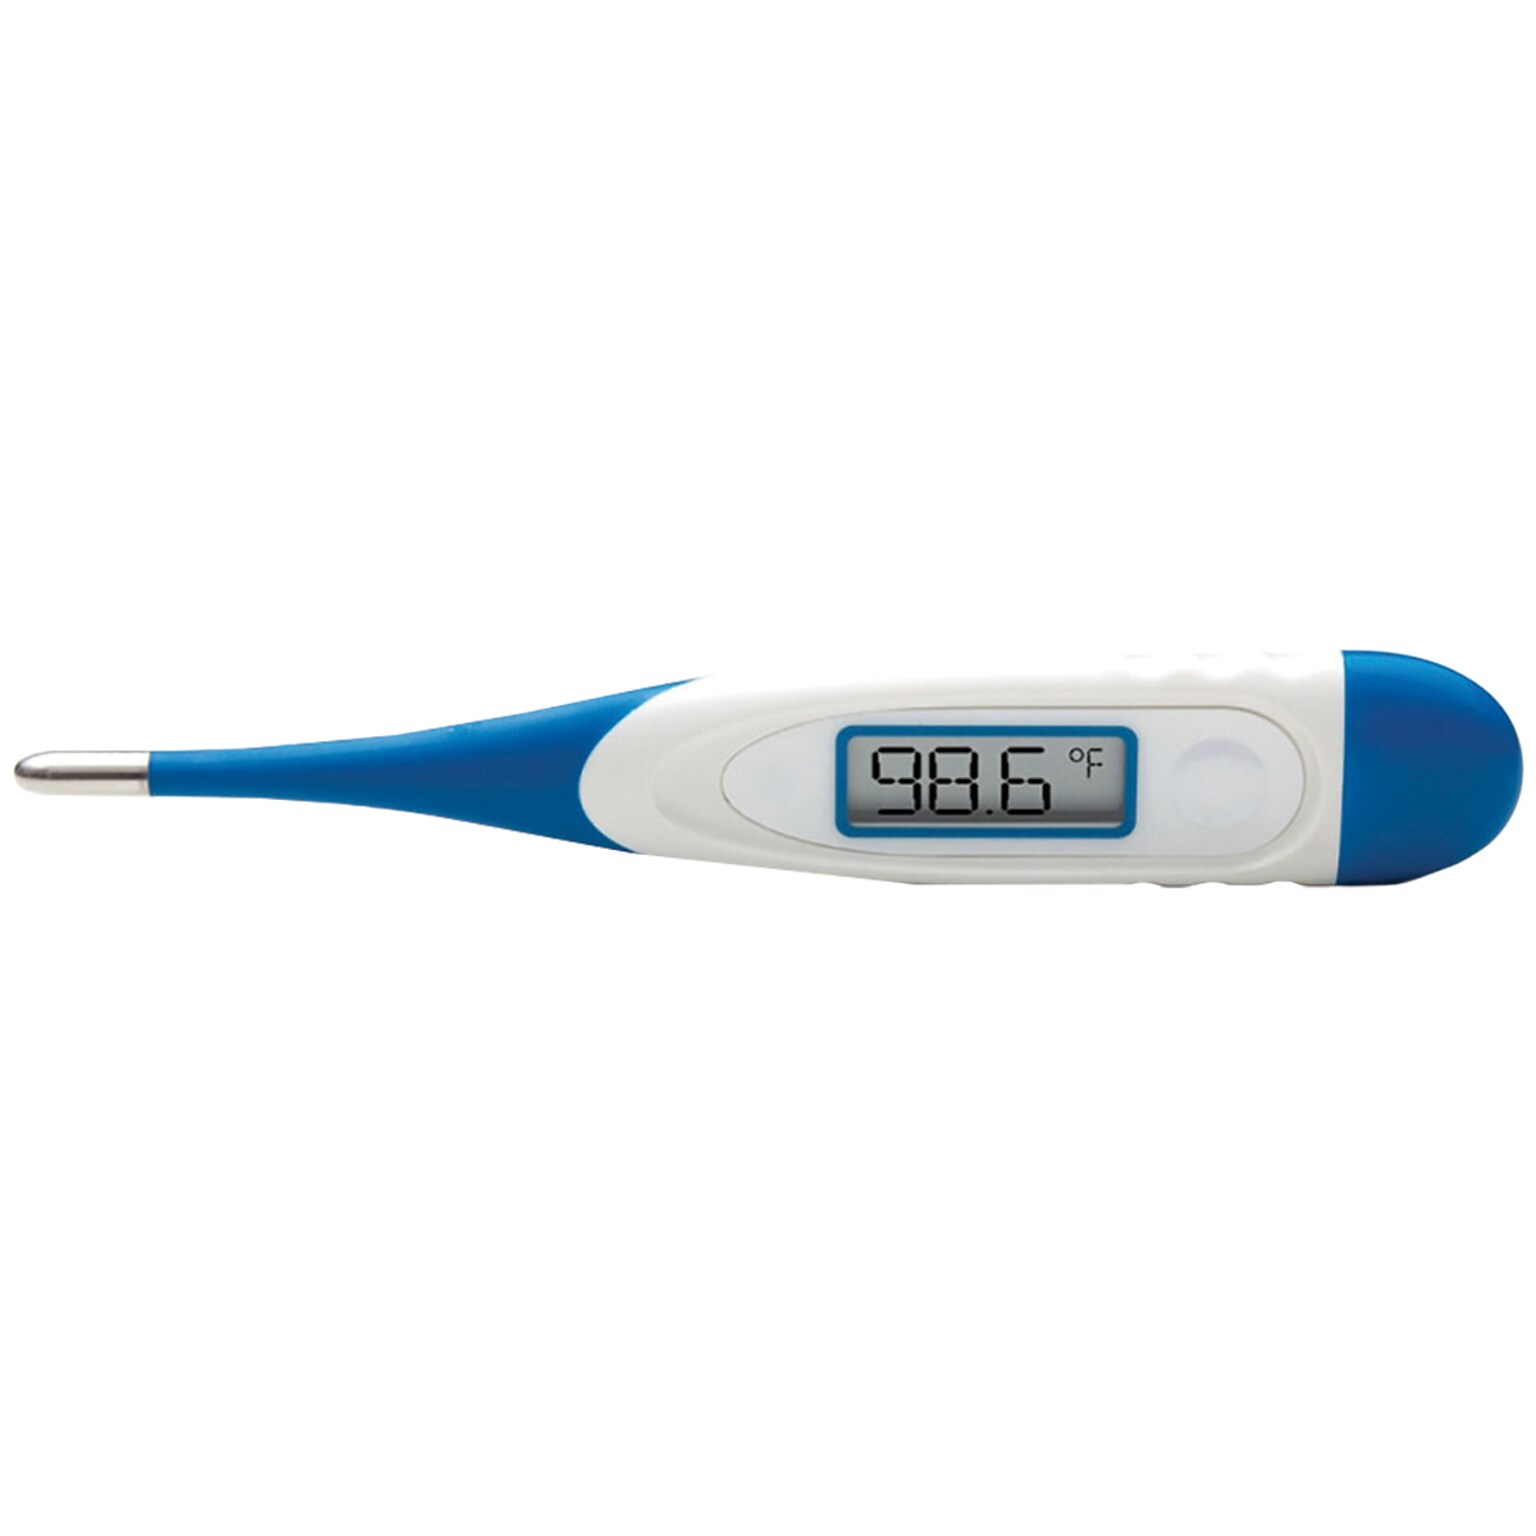 ADC Adtemp Flex-tip 10 Second Digital Thermometer (77-0009)